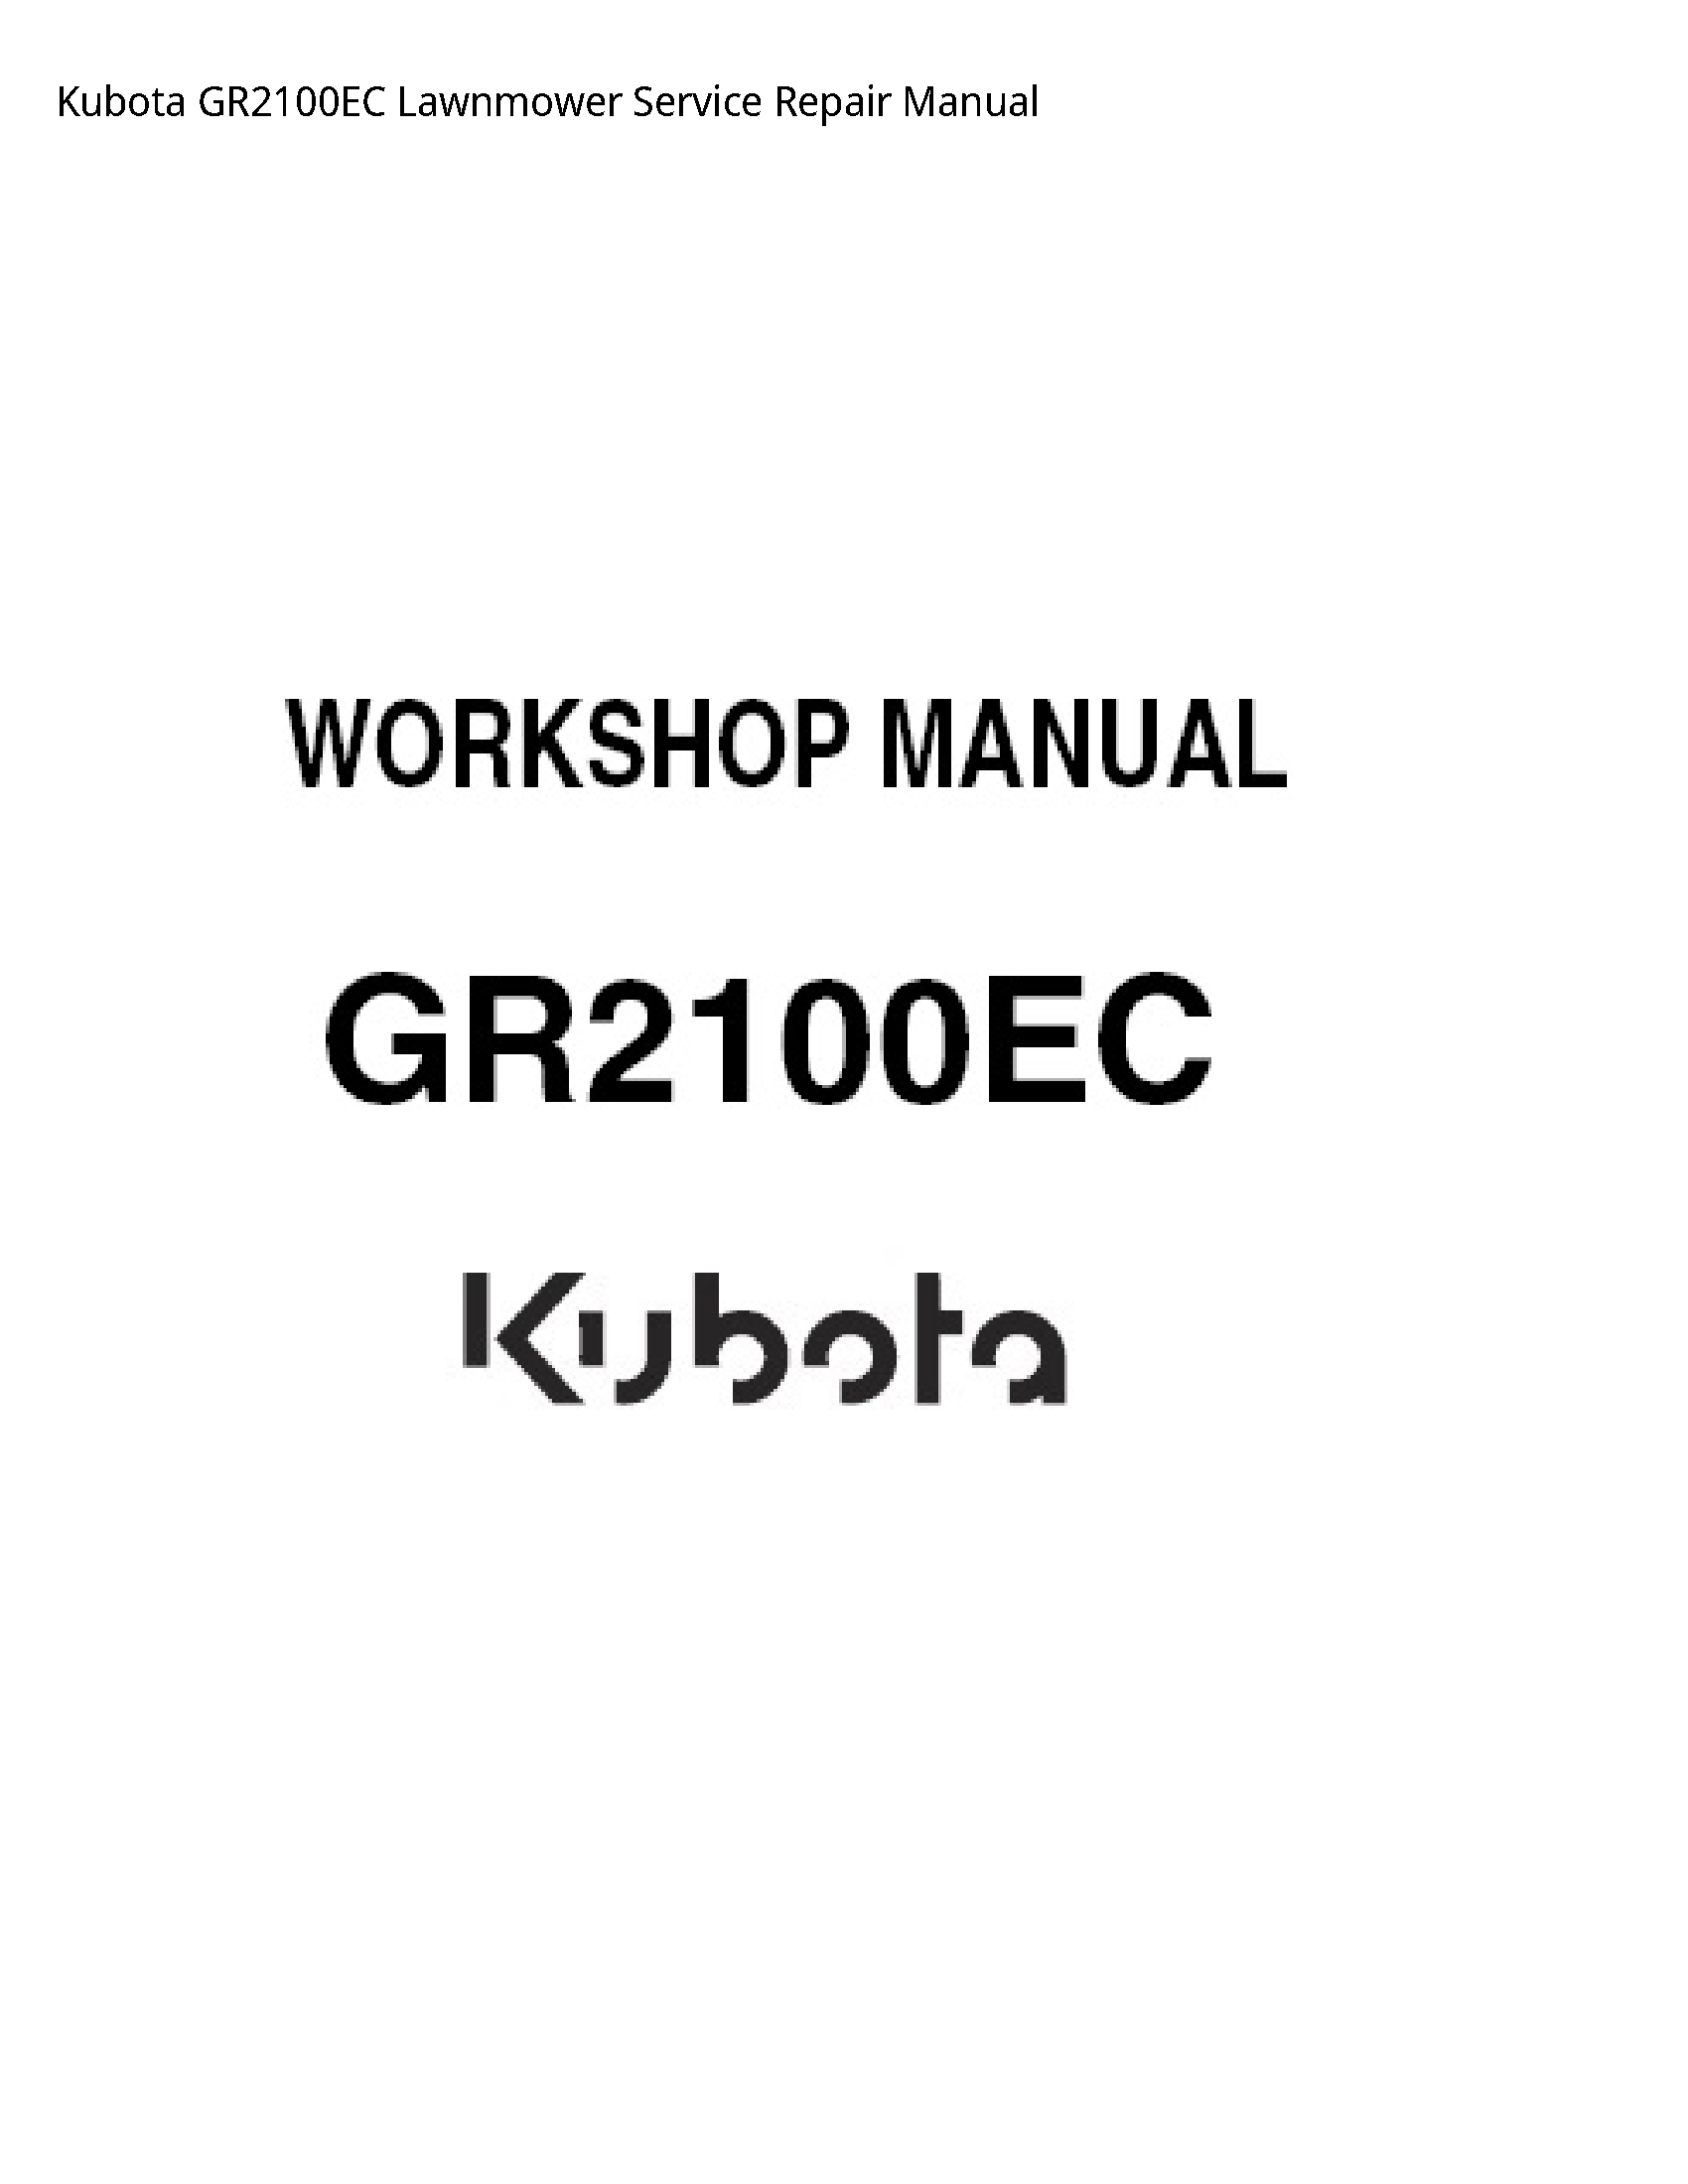 Kubota GR2100EC Lawnmower manual